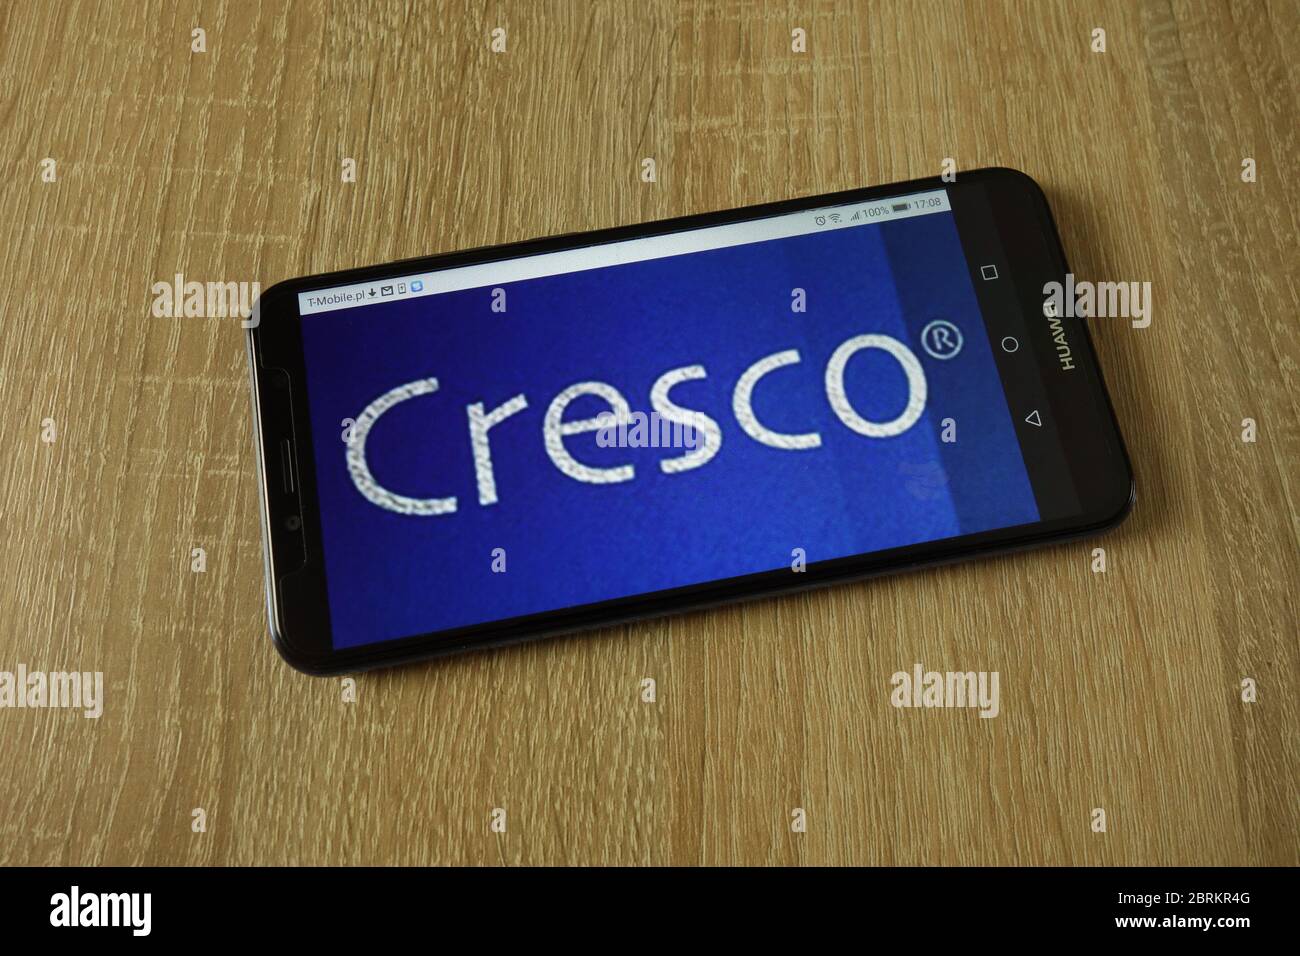 Cresco finance company logo displayed on smartphone Stock Photo